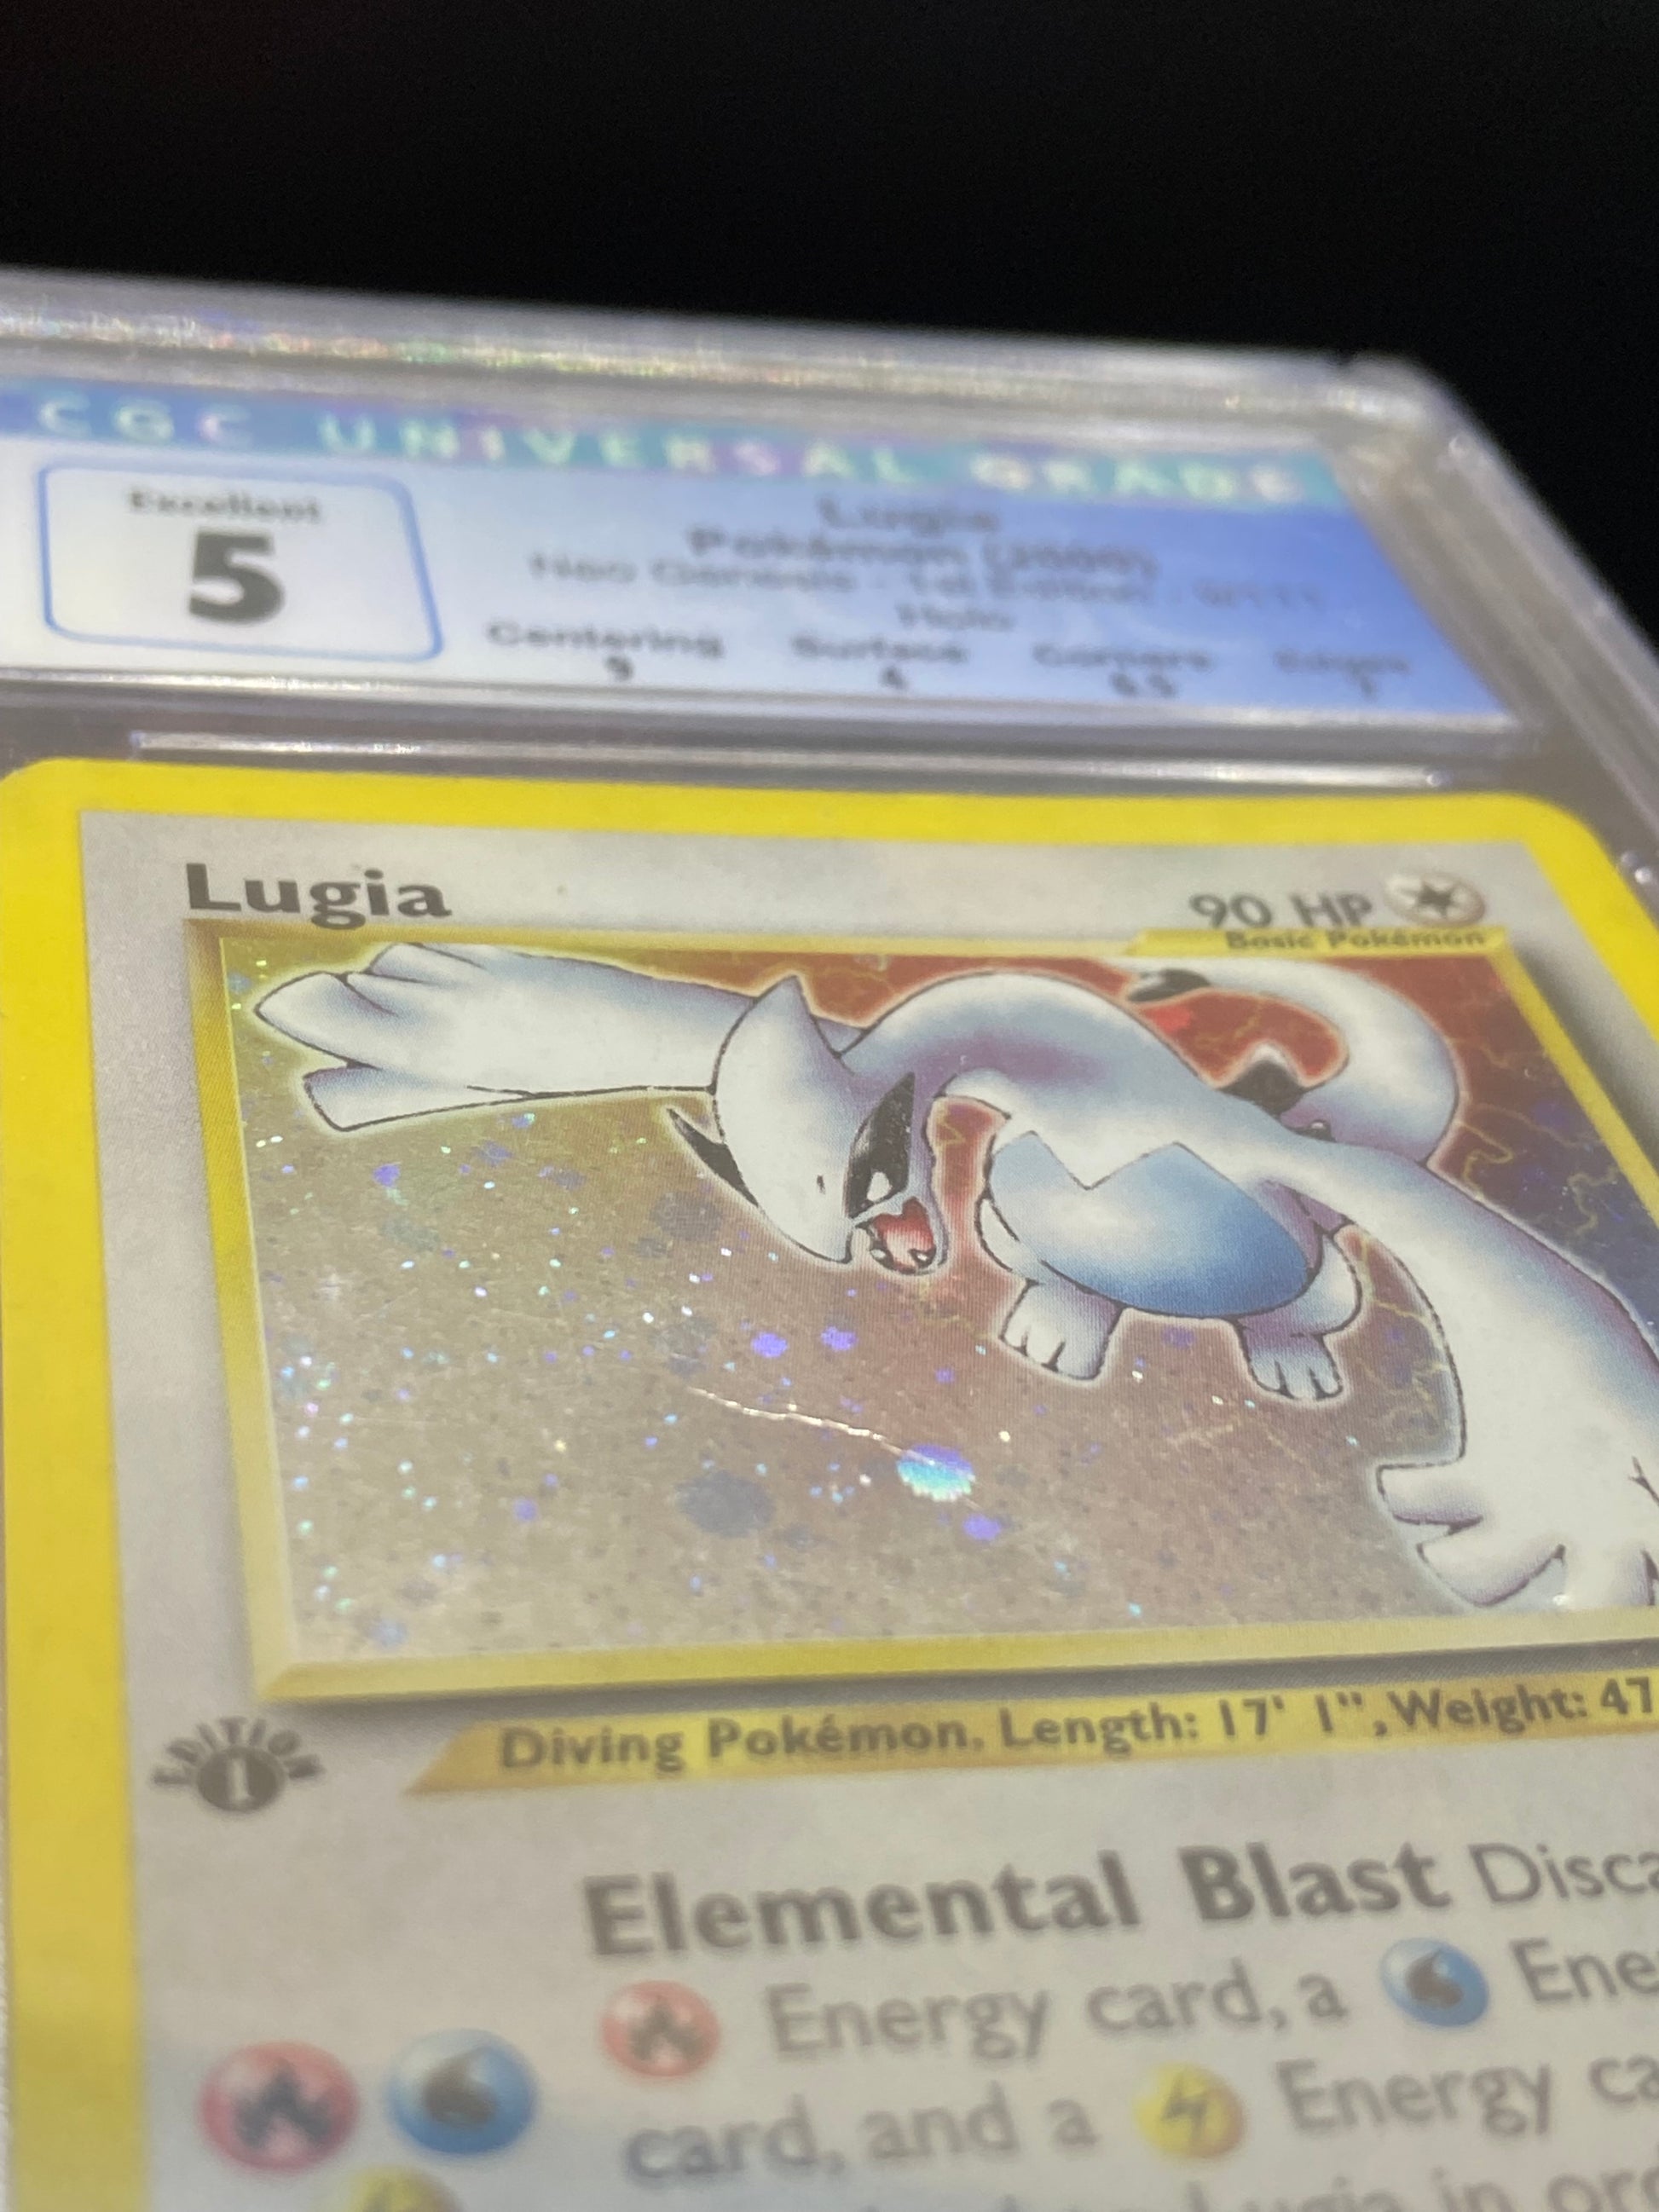 Lugia - Neo Genesis Unlimited - Pokemon